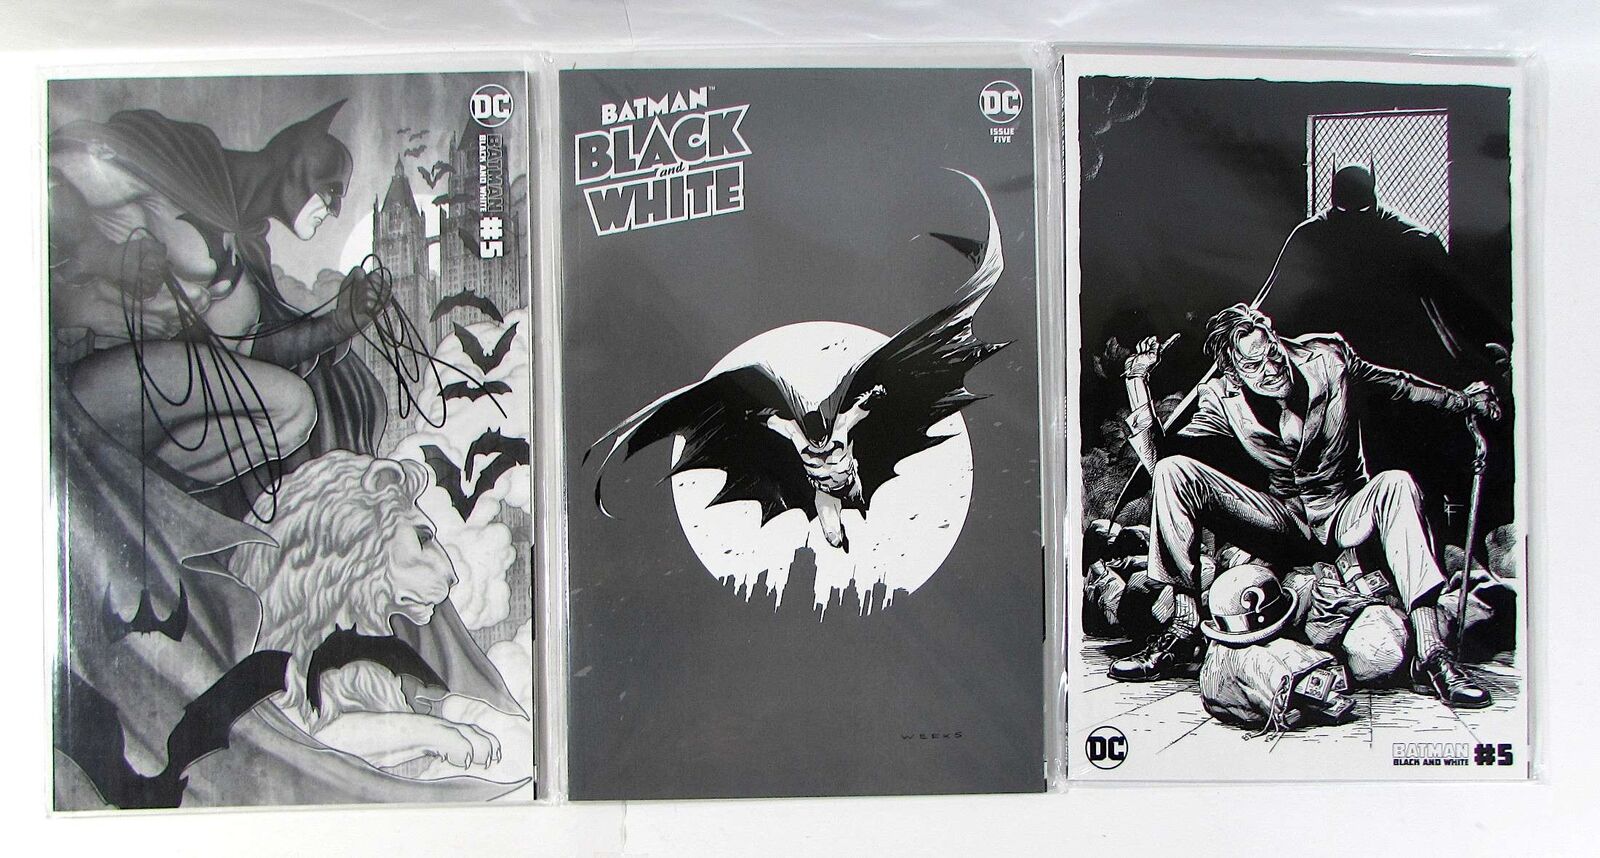 Batman Black And White Lot of 3 #5,5 b,5 c DC (2021) Comic Books